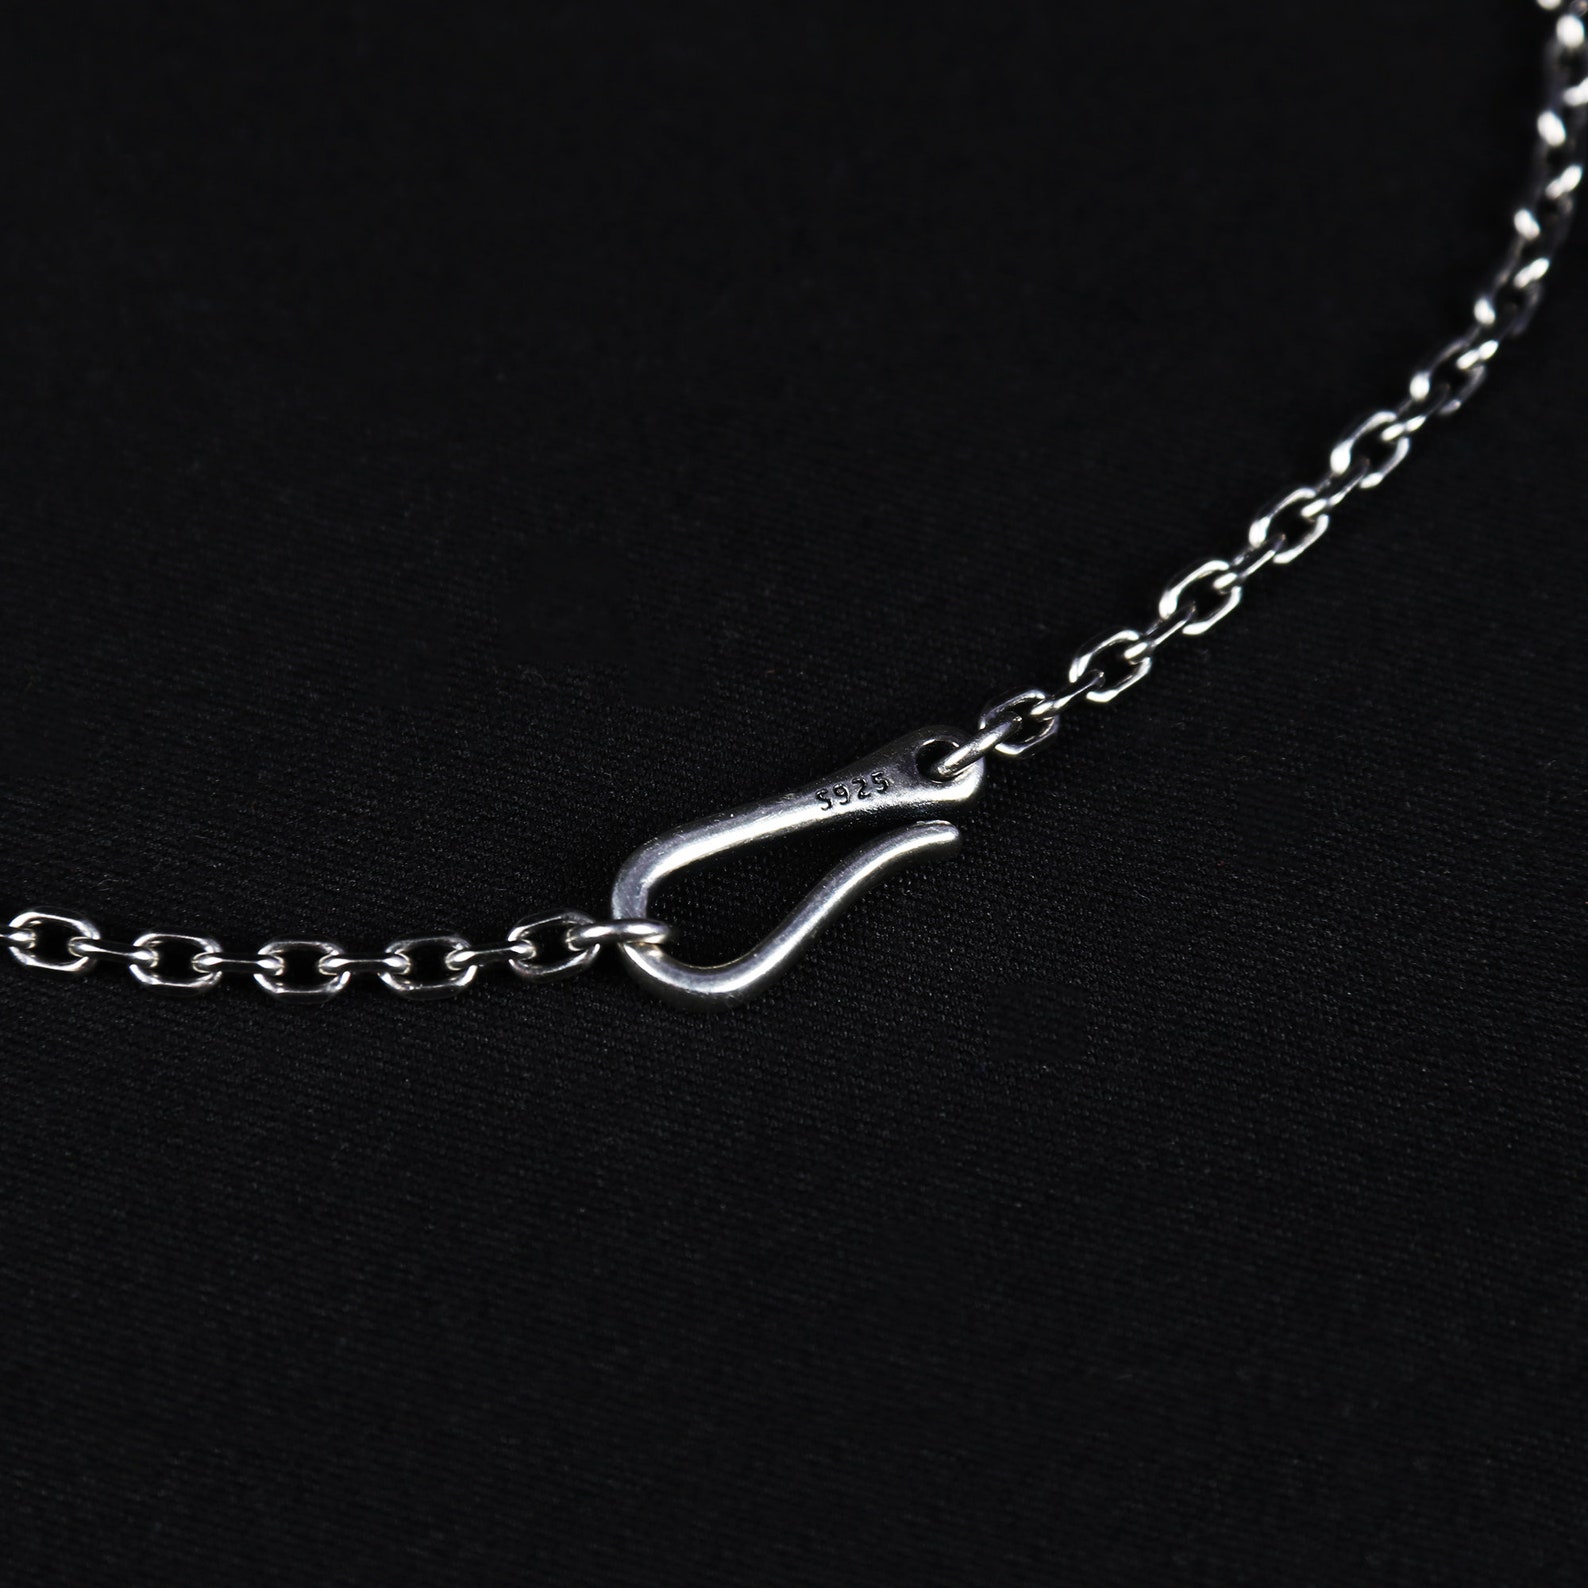 Silver 925 Behelit Pendant Berserk behelit Necklace Griffith | Etsy